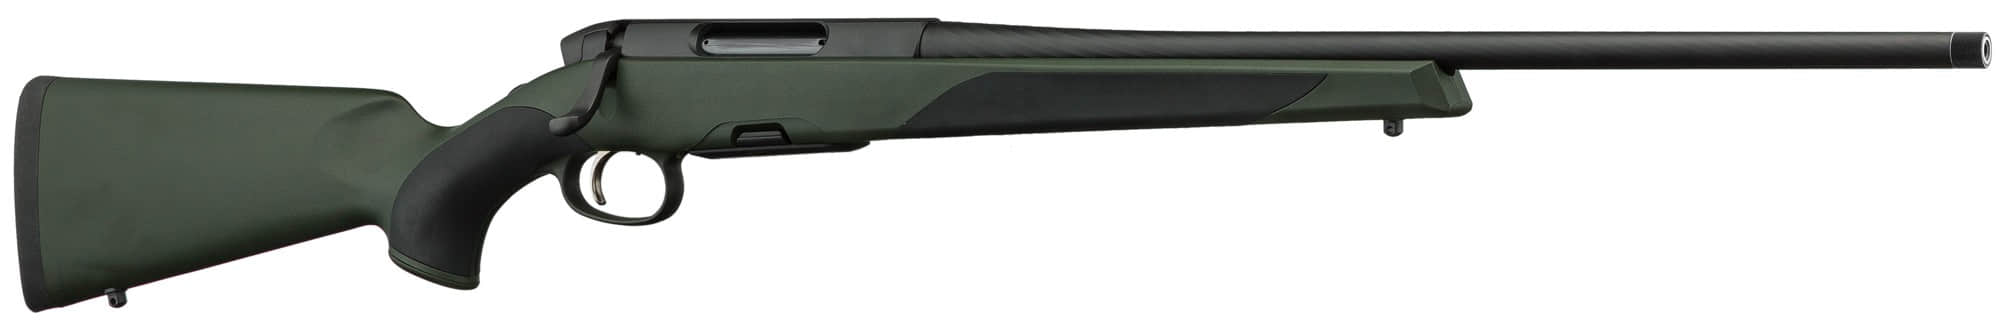 SMM13436-1 Carabine STEYR SM12 SX - Armement séparé - SMM13420